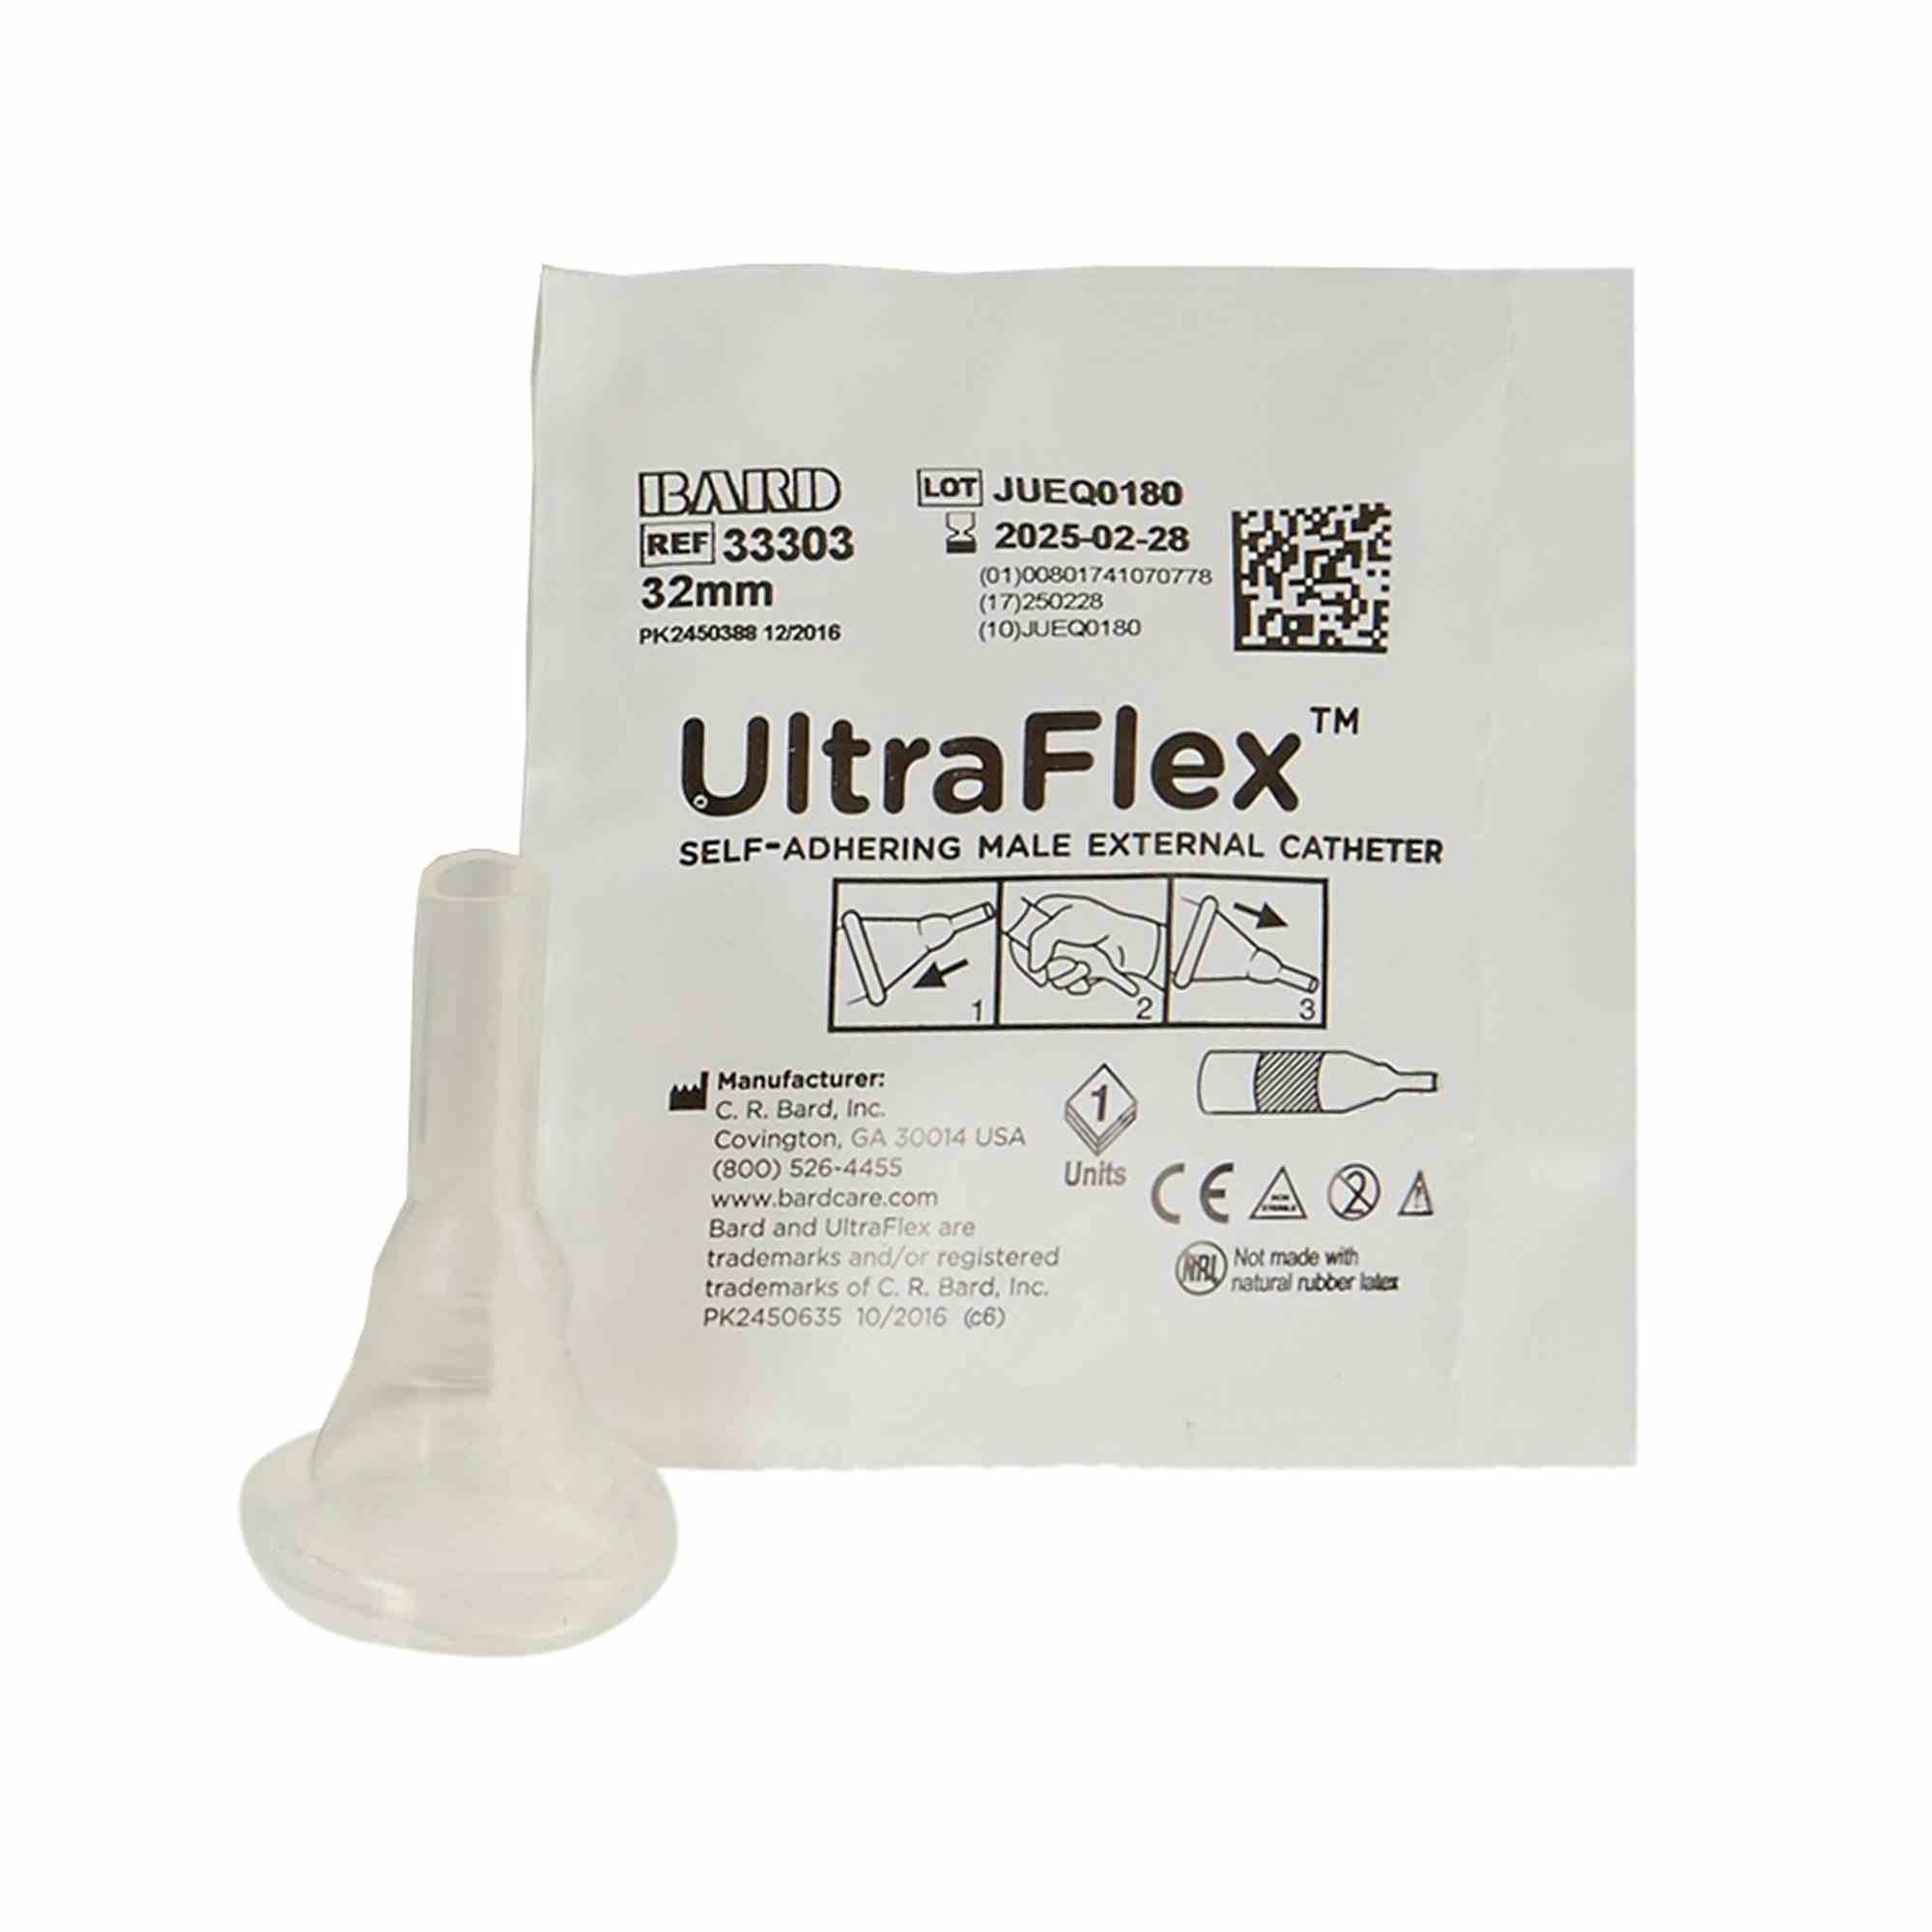 Bard UltraFlex Self-Adhering Male External Catheter, 33303, Intermediate (32 mm) - Box of 30